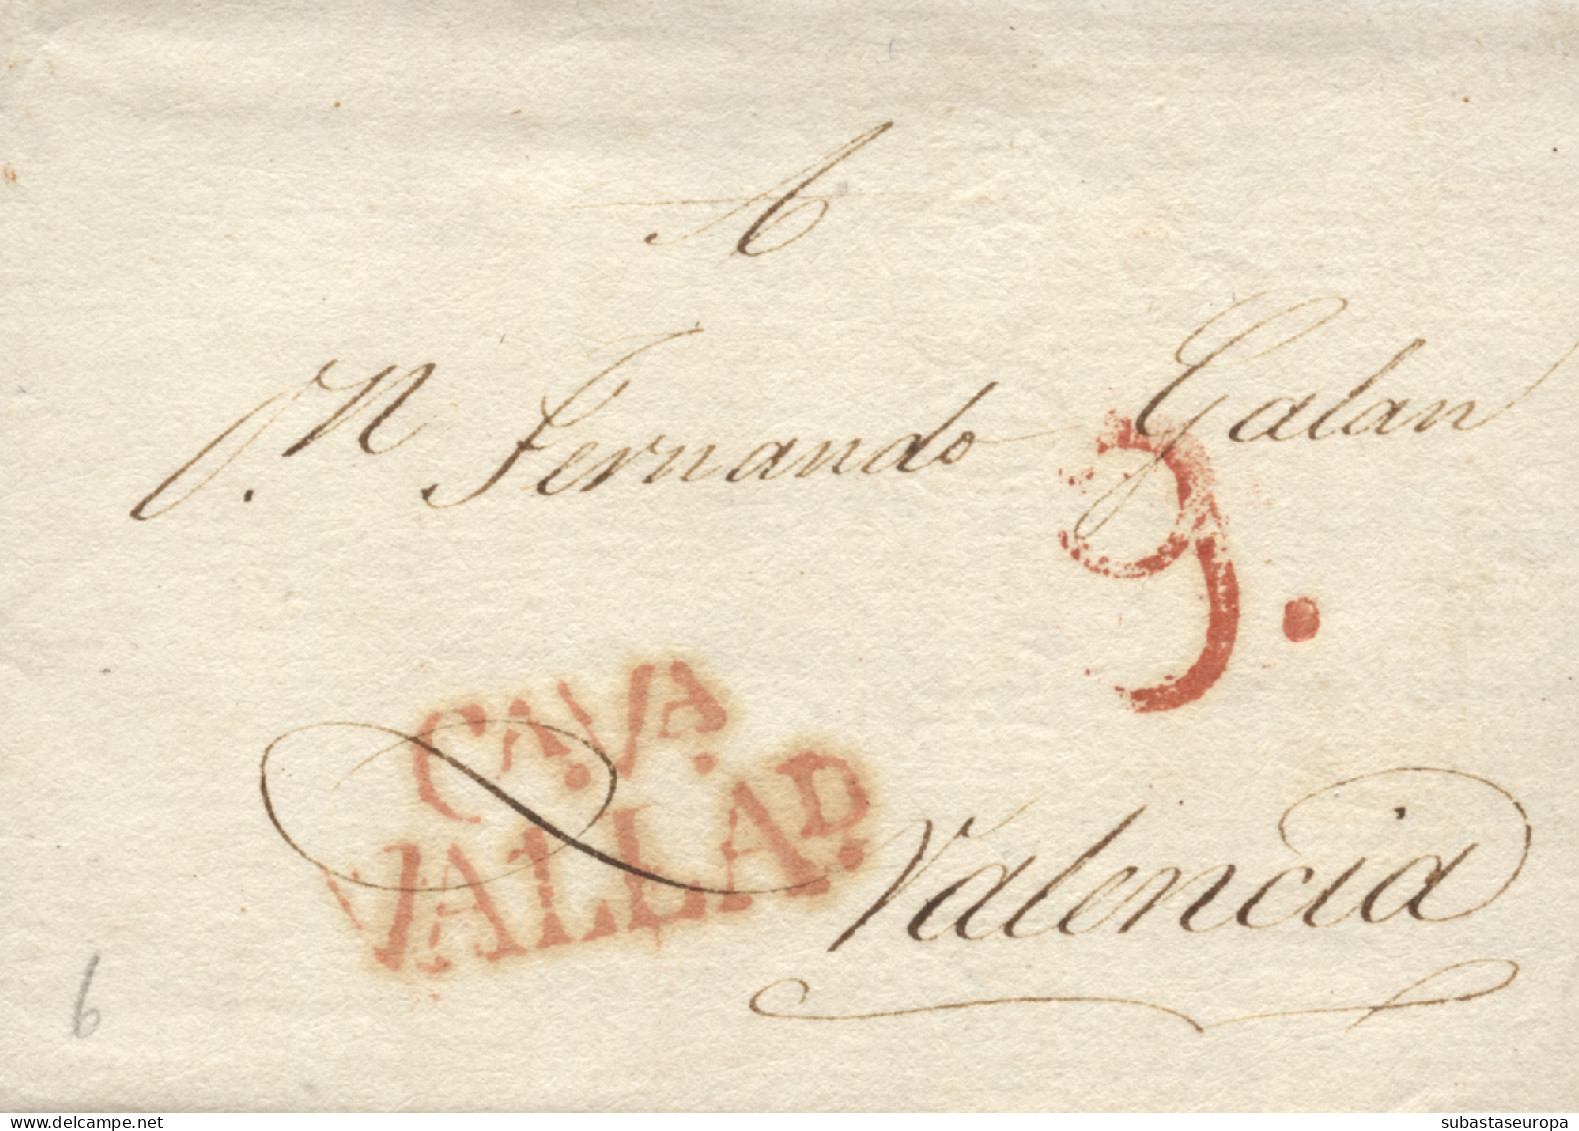 D.P. 14. 1829 (19 AGO). Carta De Valladolid A Valencia. Marca Nº 21R. - ...-1850 Prephilately